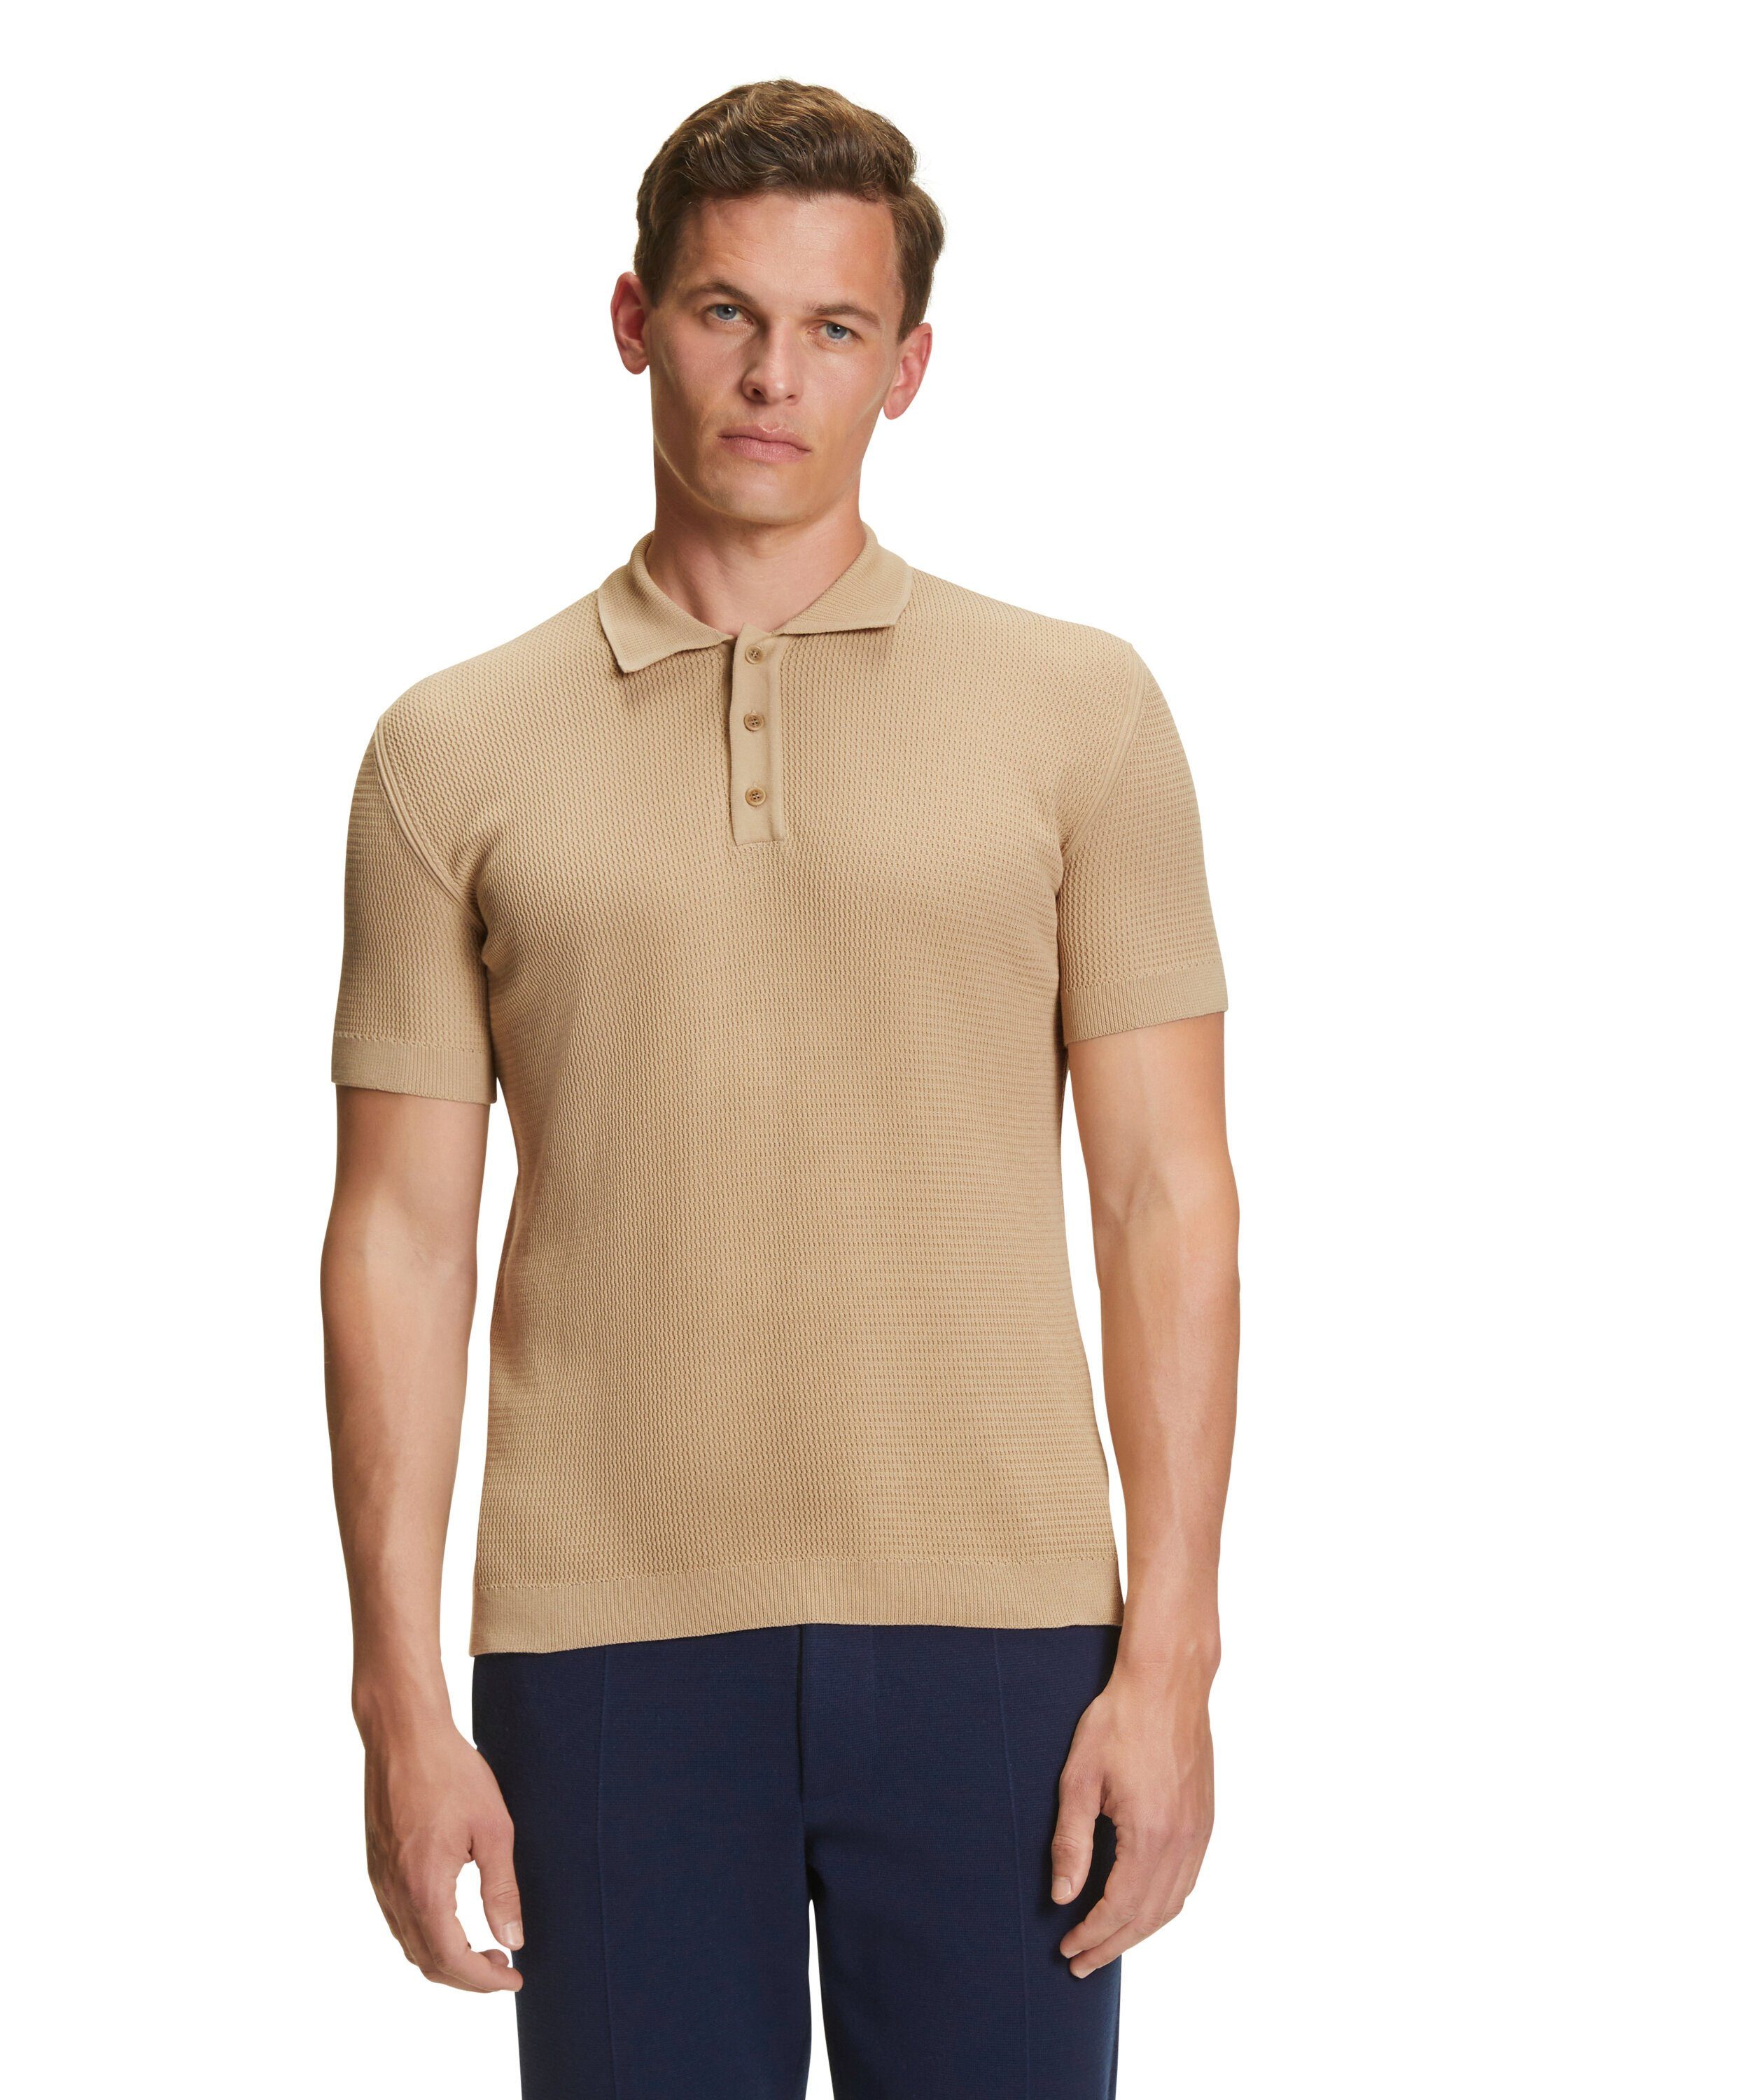 FALKE Poloshirt mit Bio-Baumwolle sand (4320) | Poloshirts